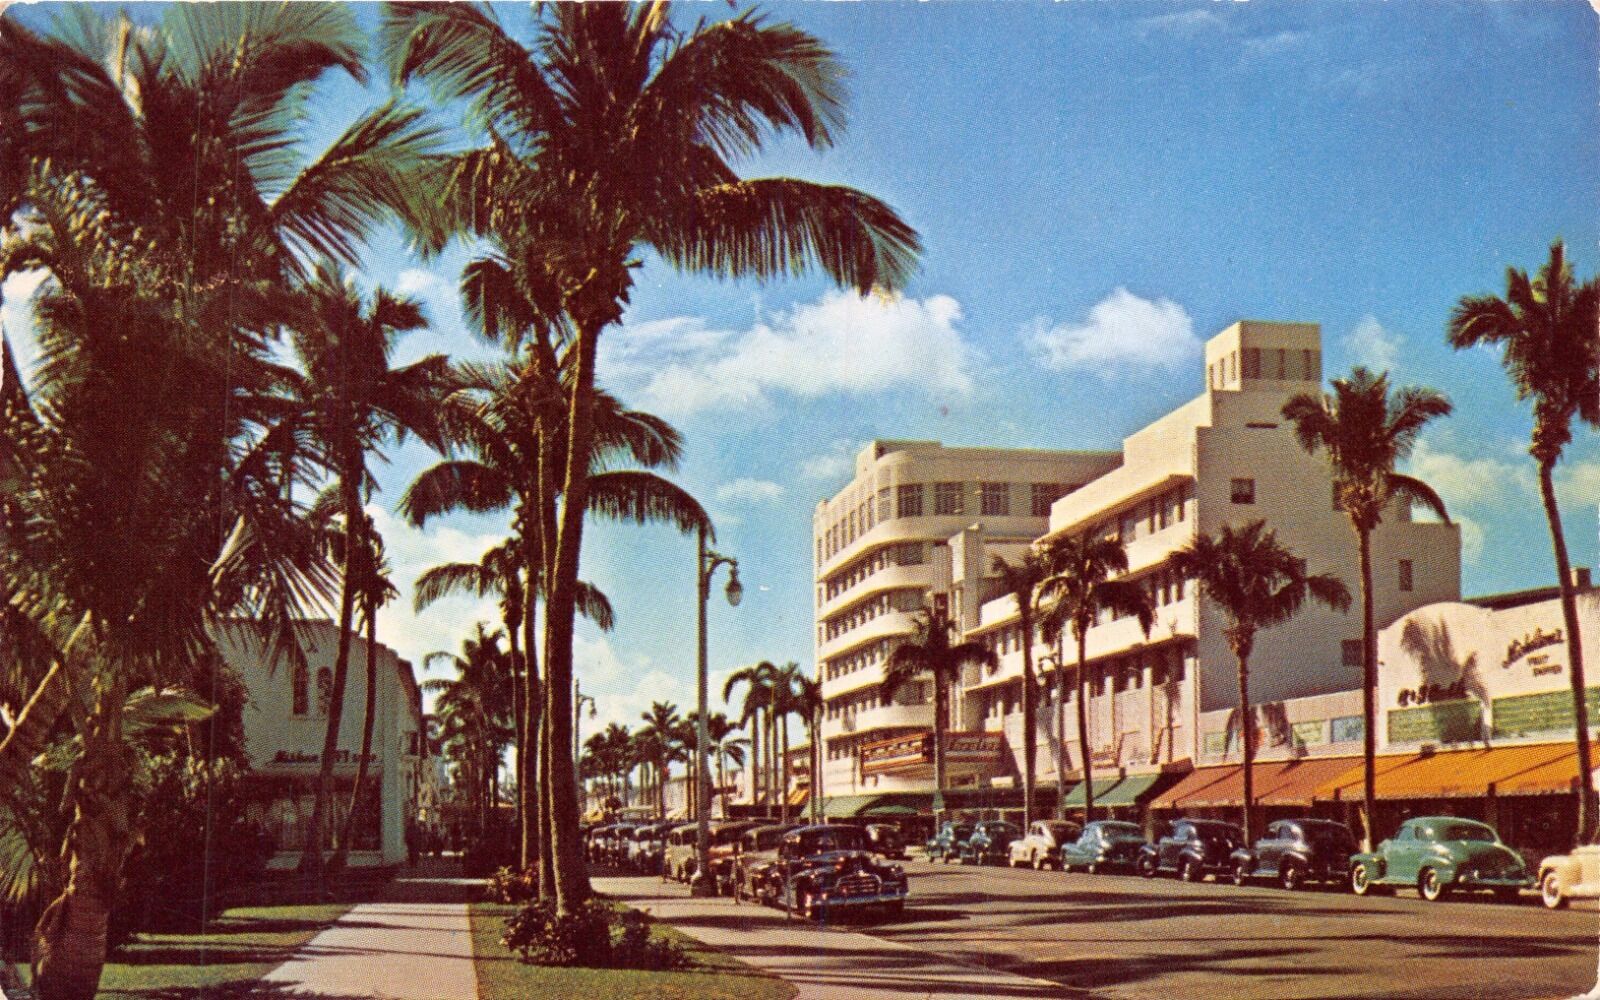 MIAMI BEACH FLORIDA  PALM STUDDED LINCOLN ROAD FASHIONABLE SHOPS POSTCARD 1950s